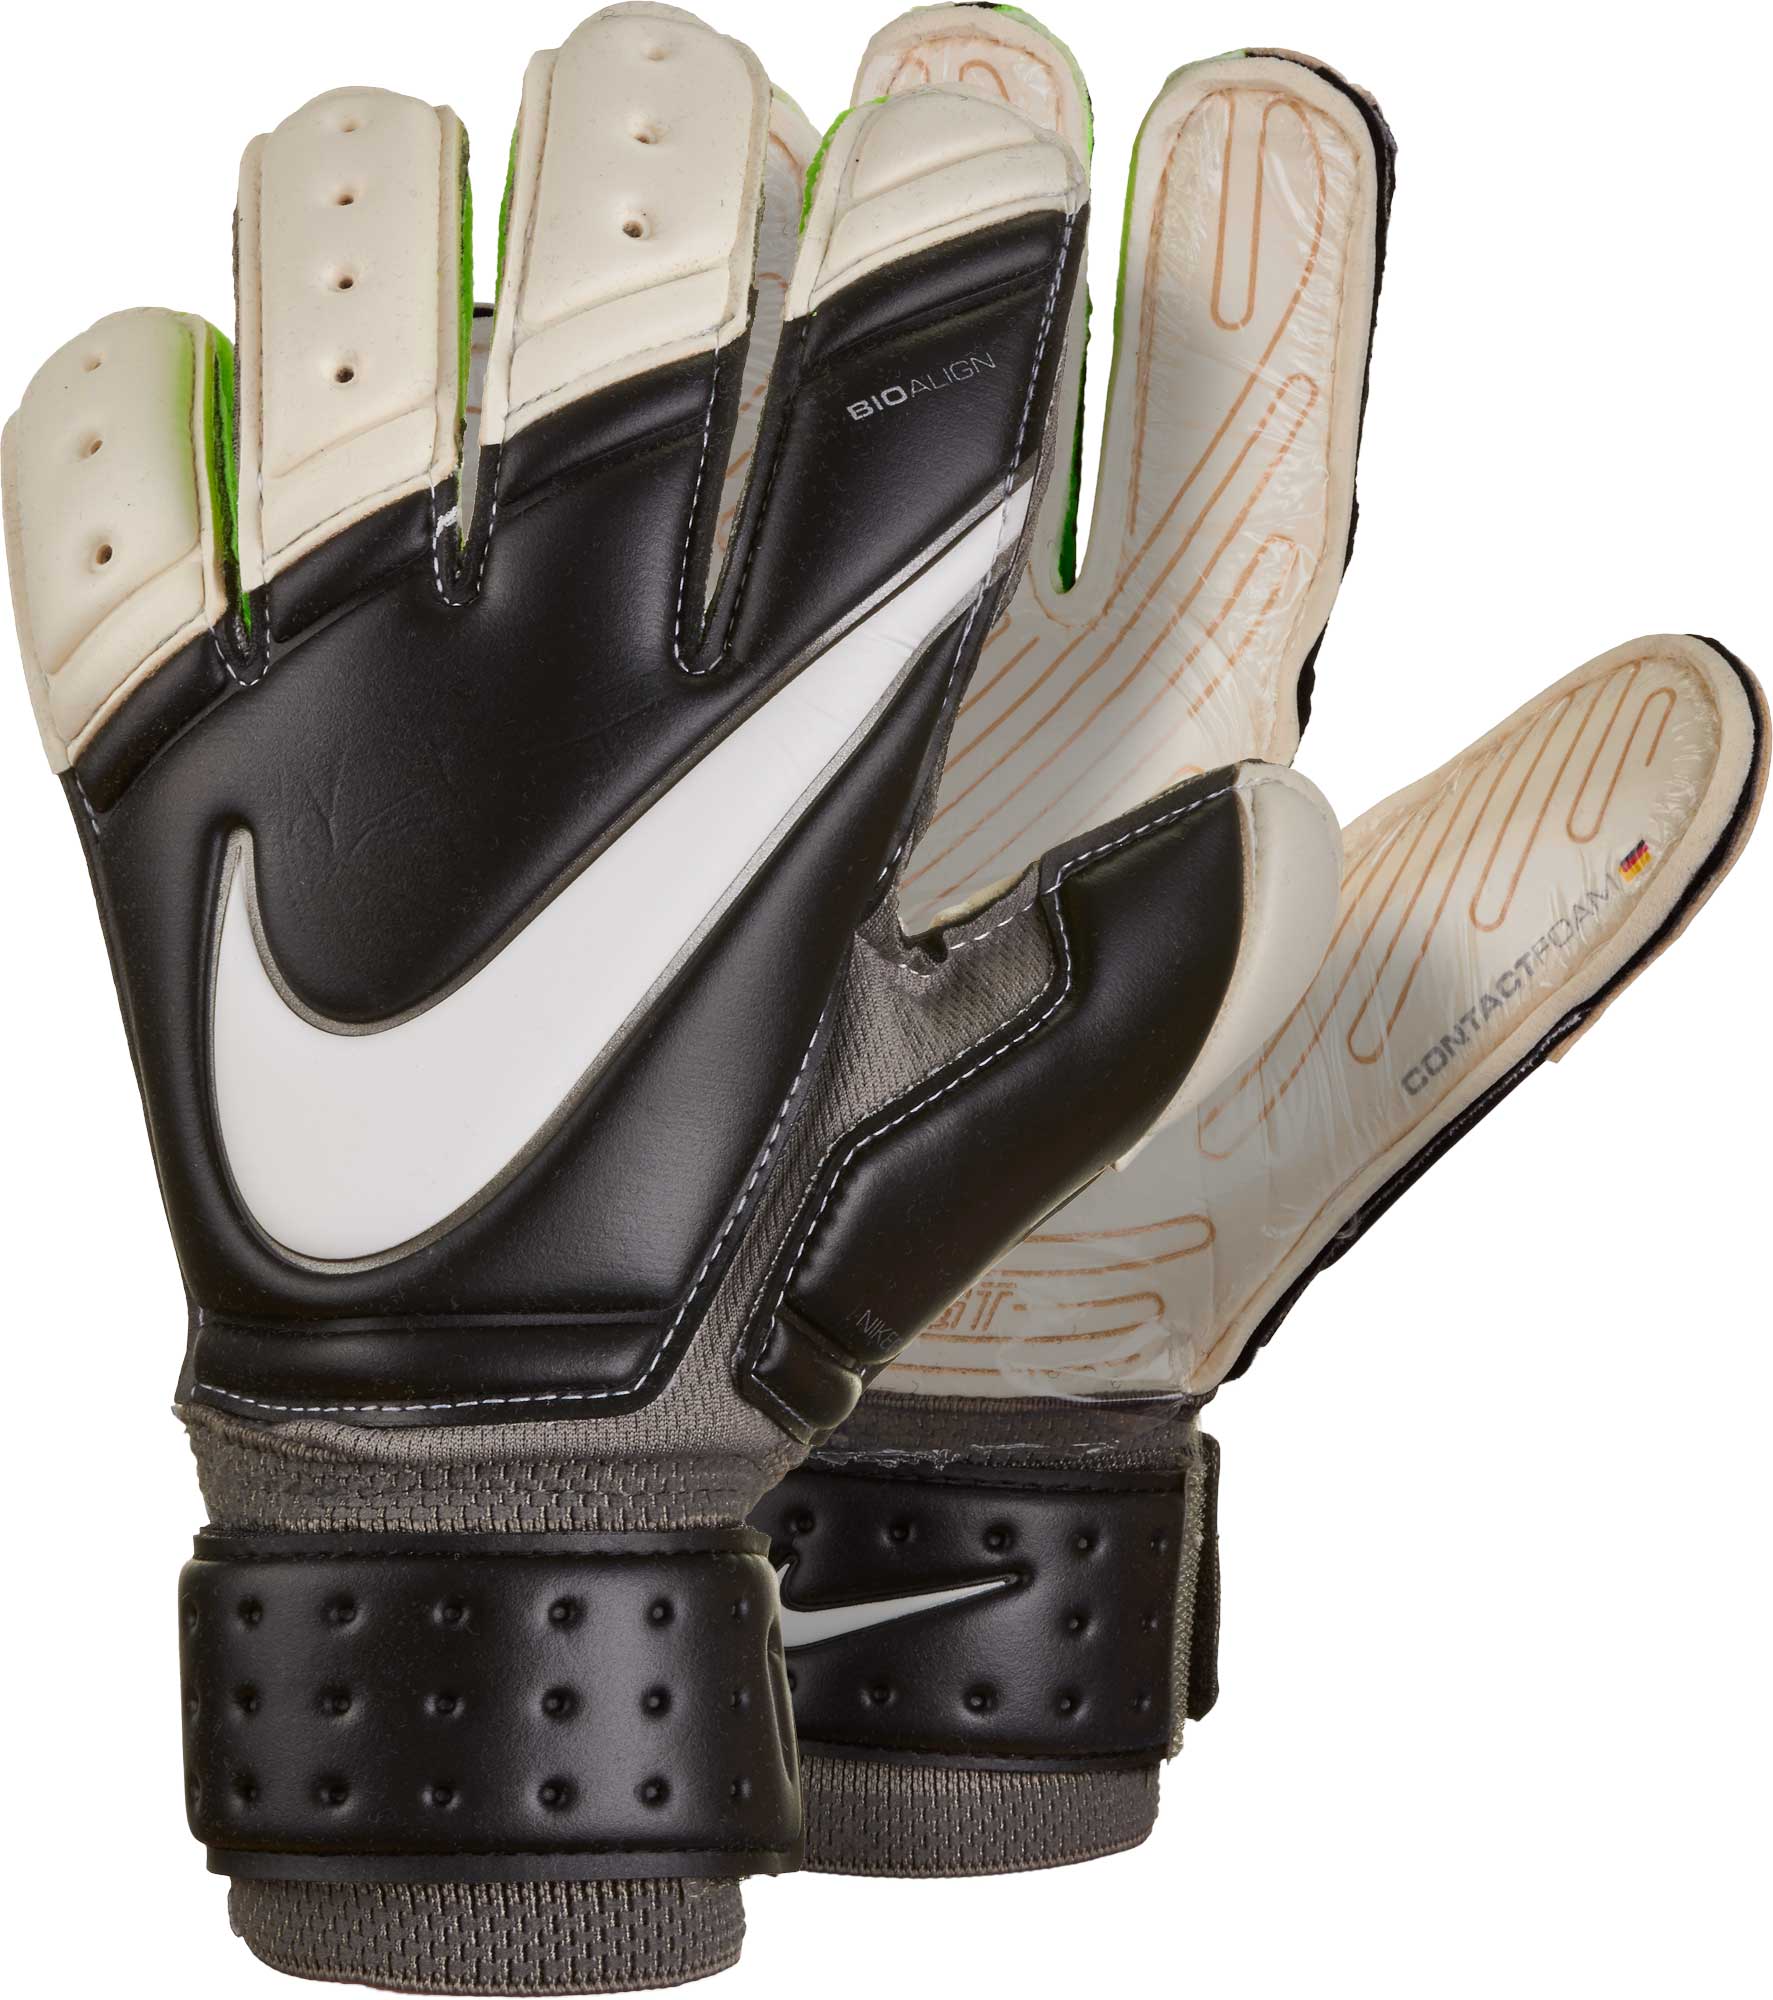 sgt goalkeeper gloves